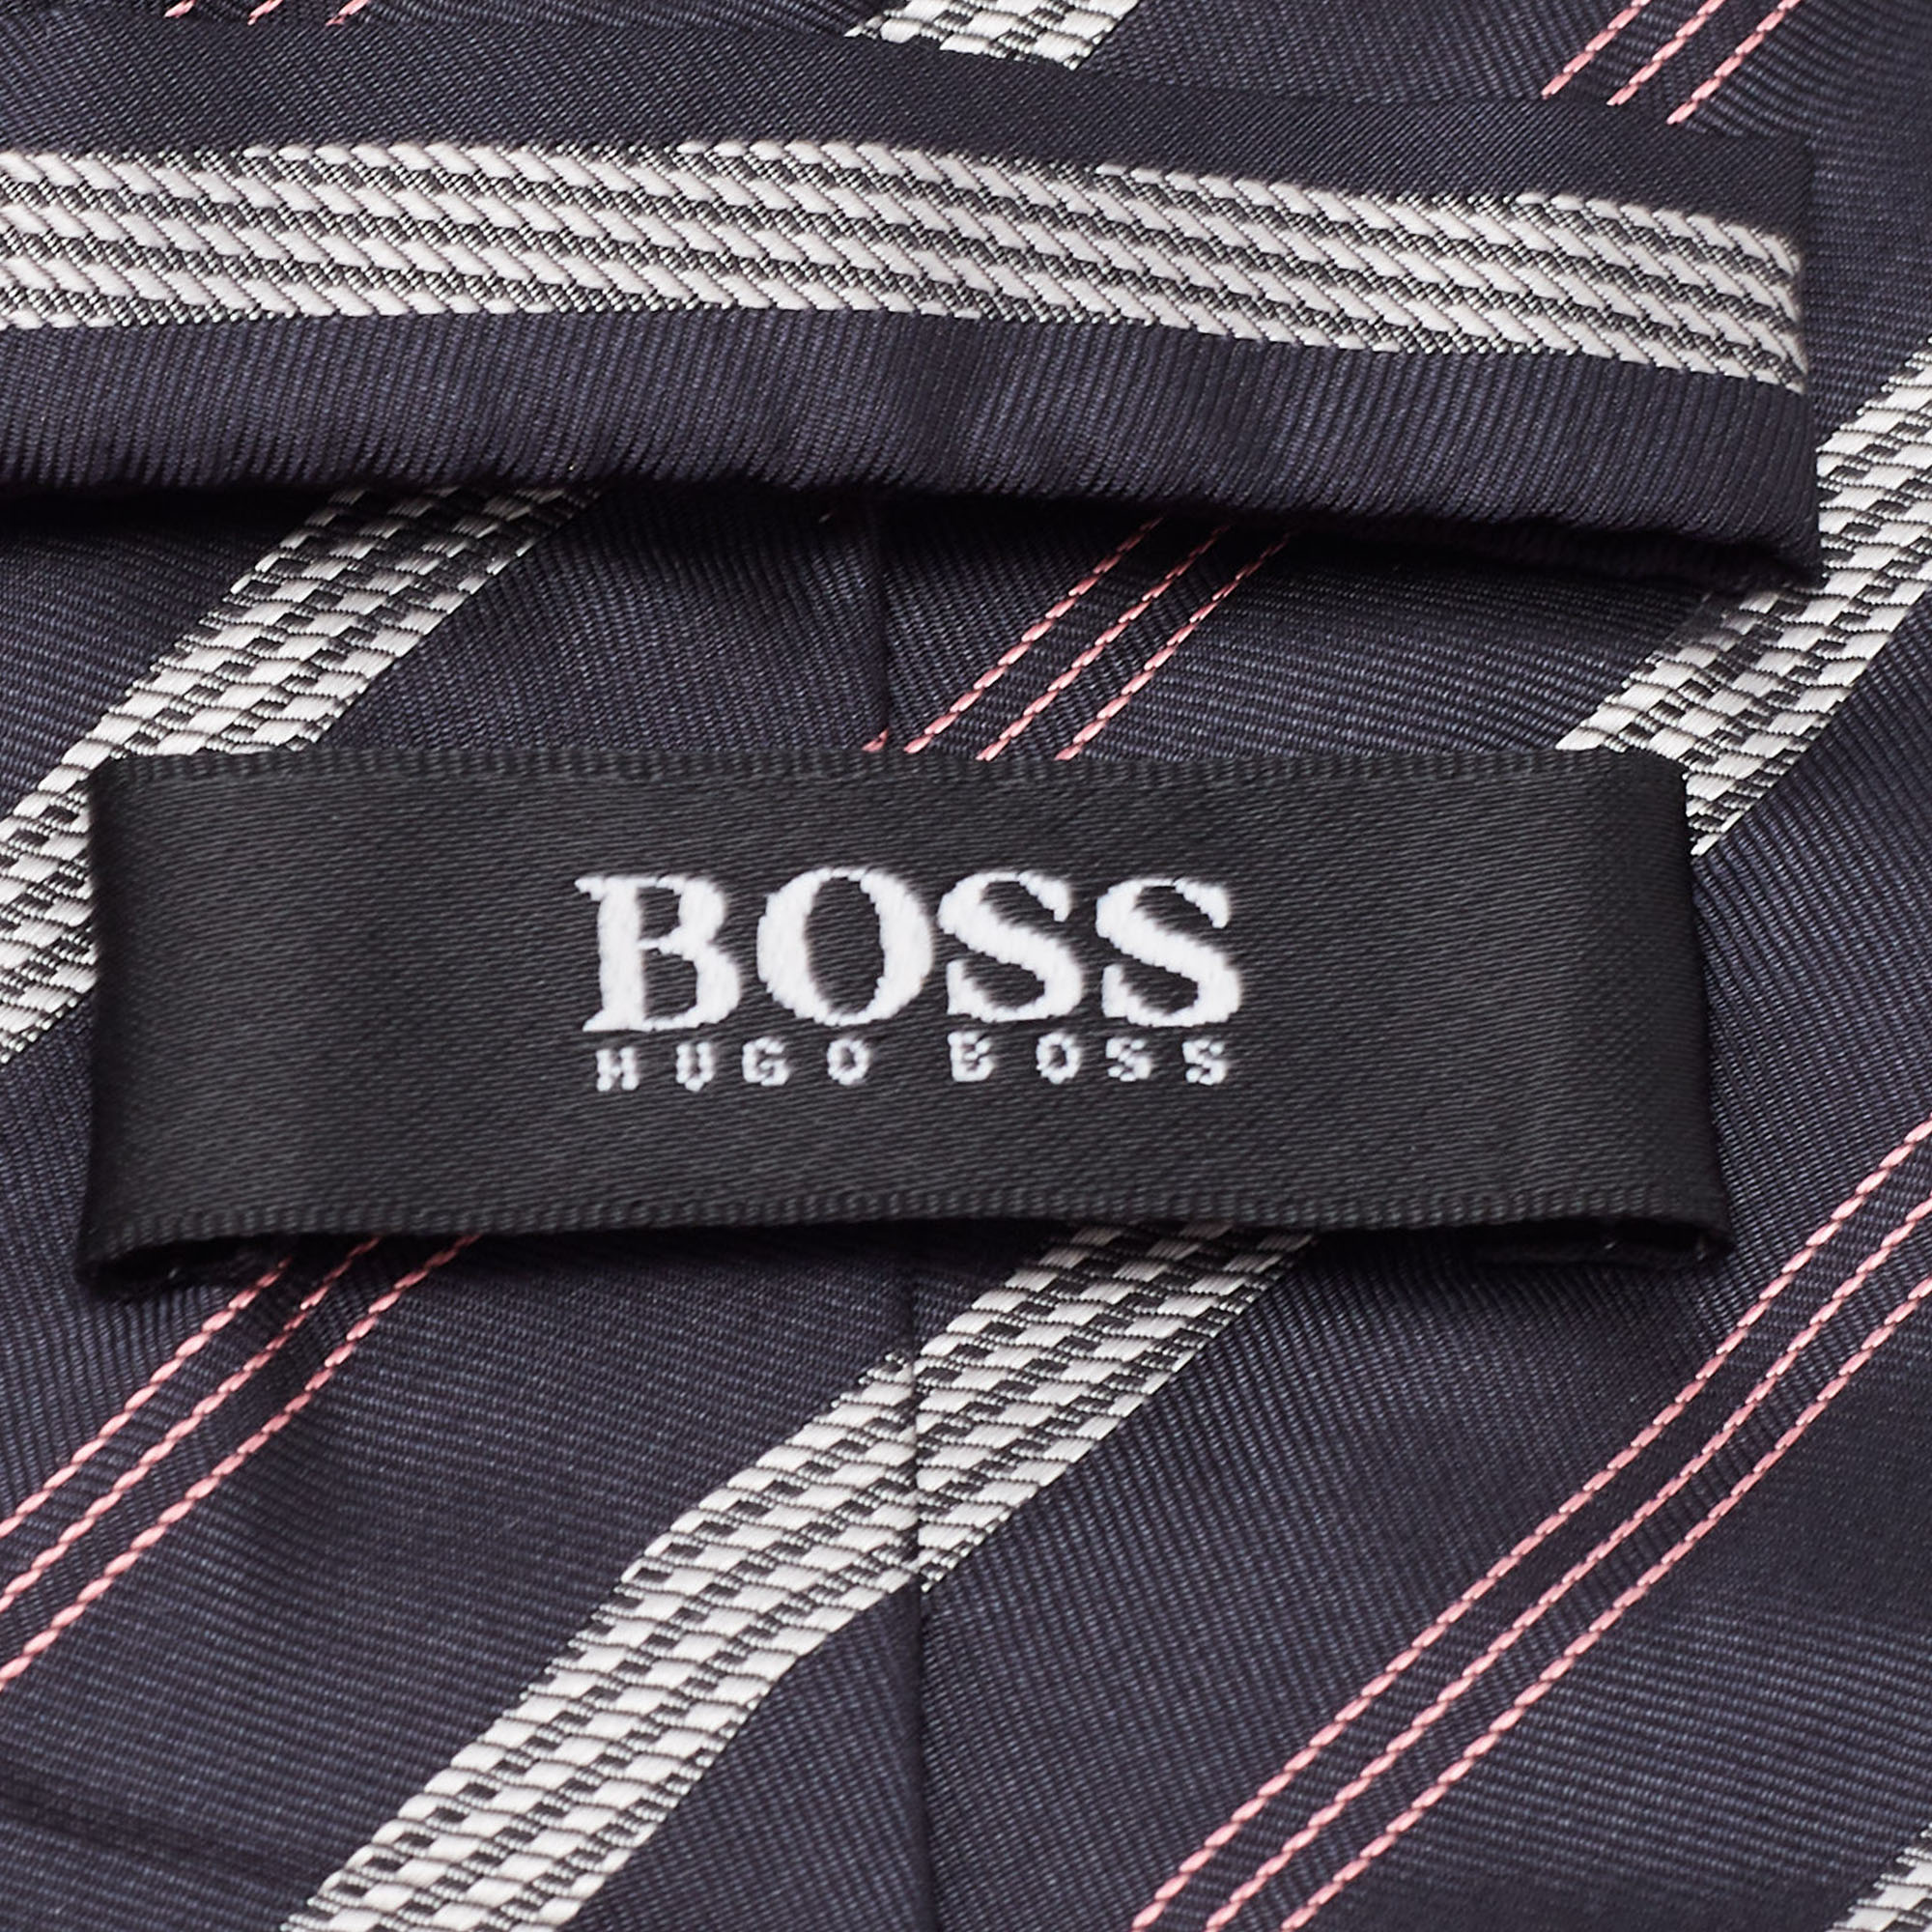 Boss By Hugo Boss Navy Blue Diagonal Striped Silk Tie